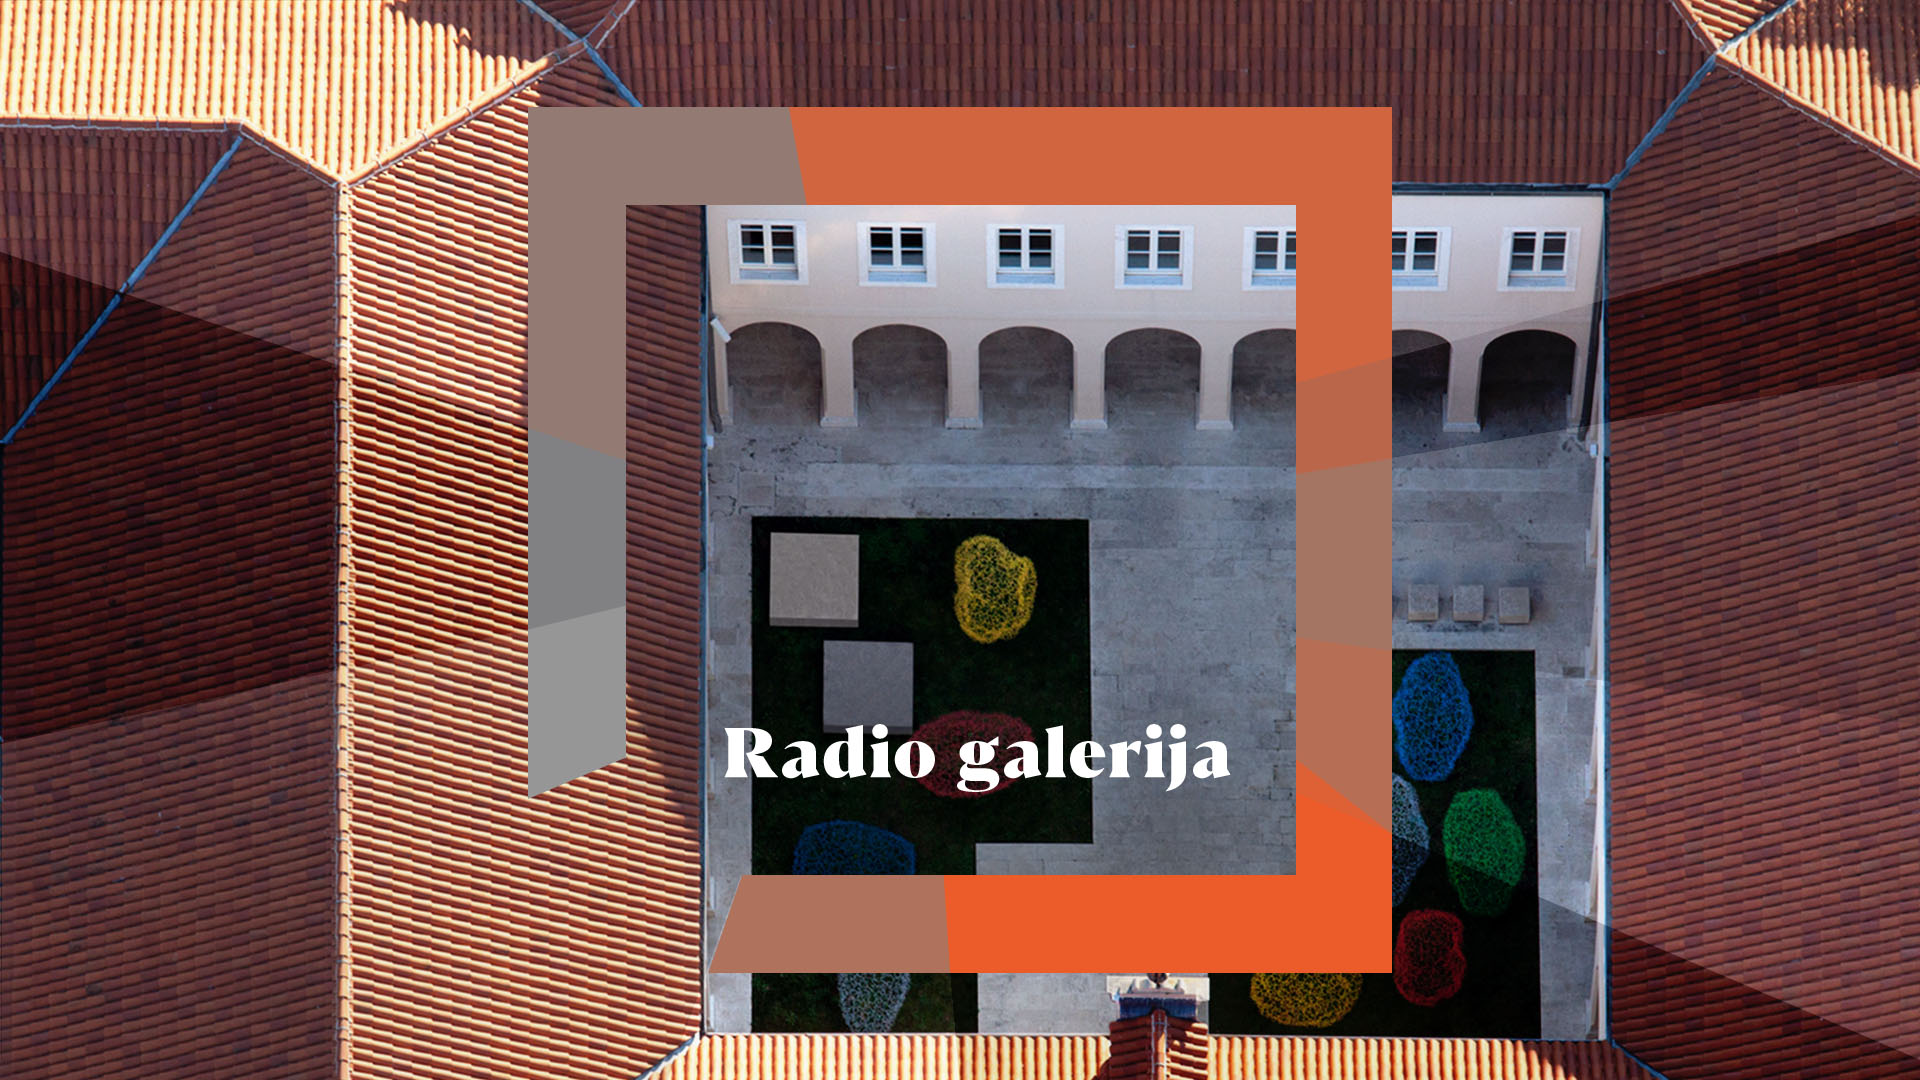 Radio galerija